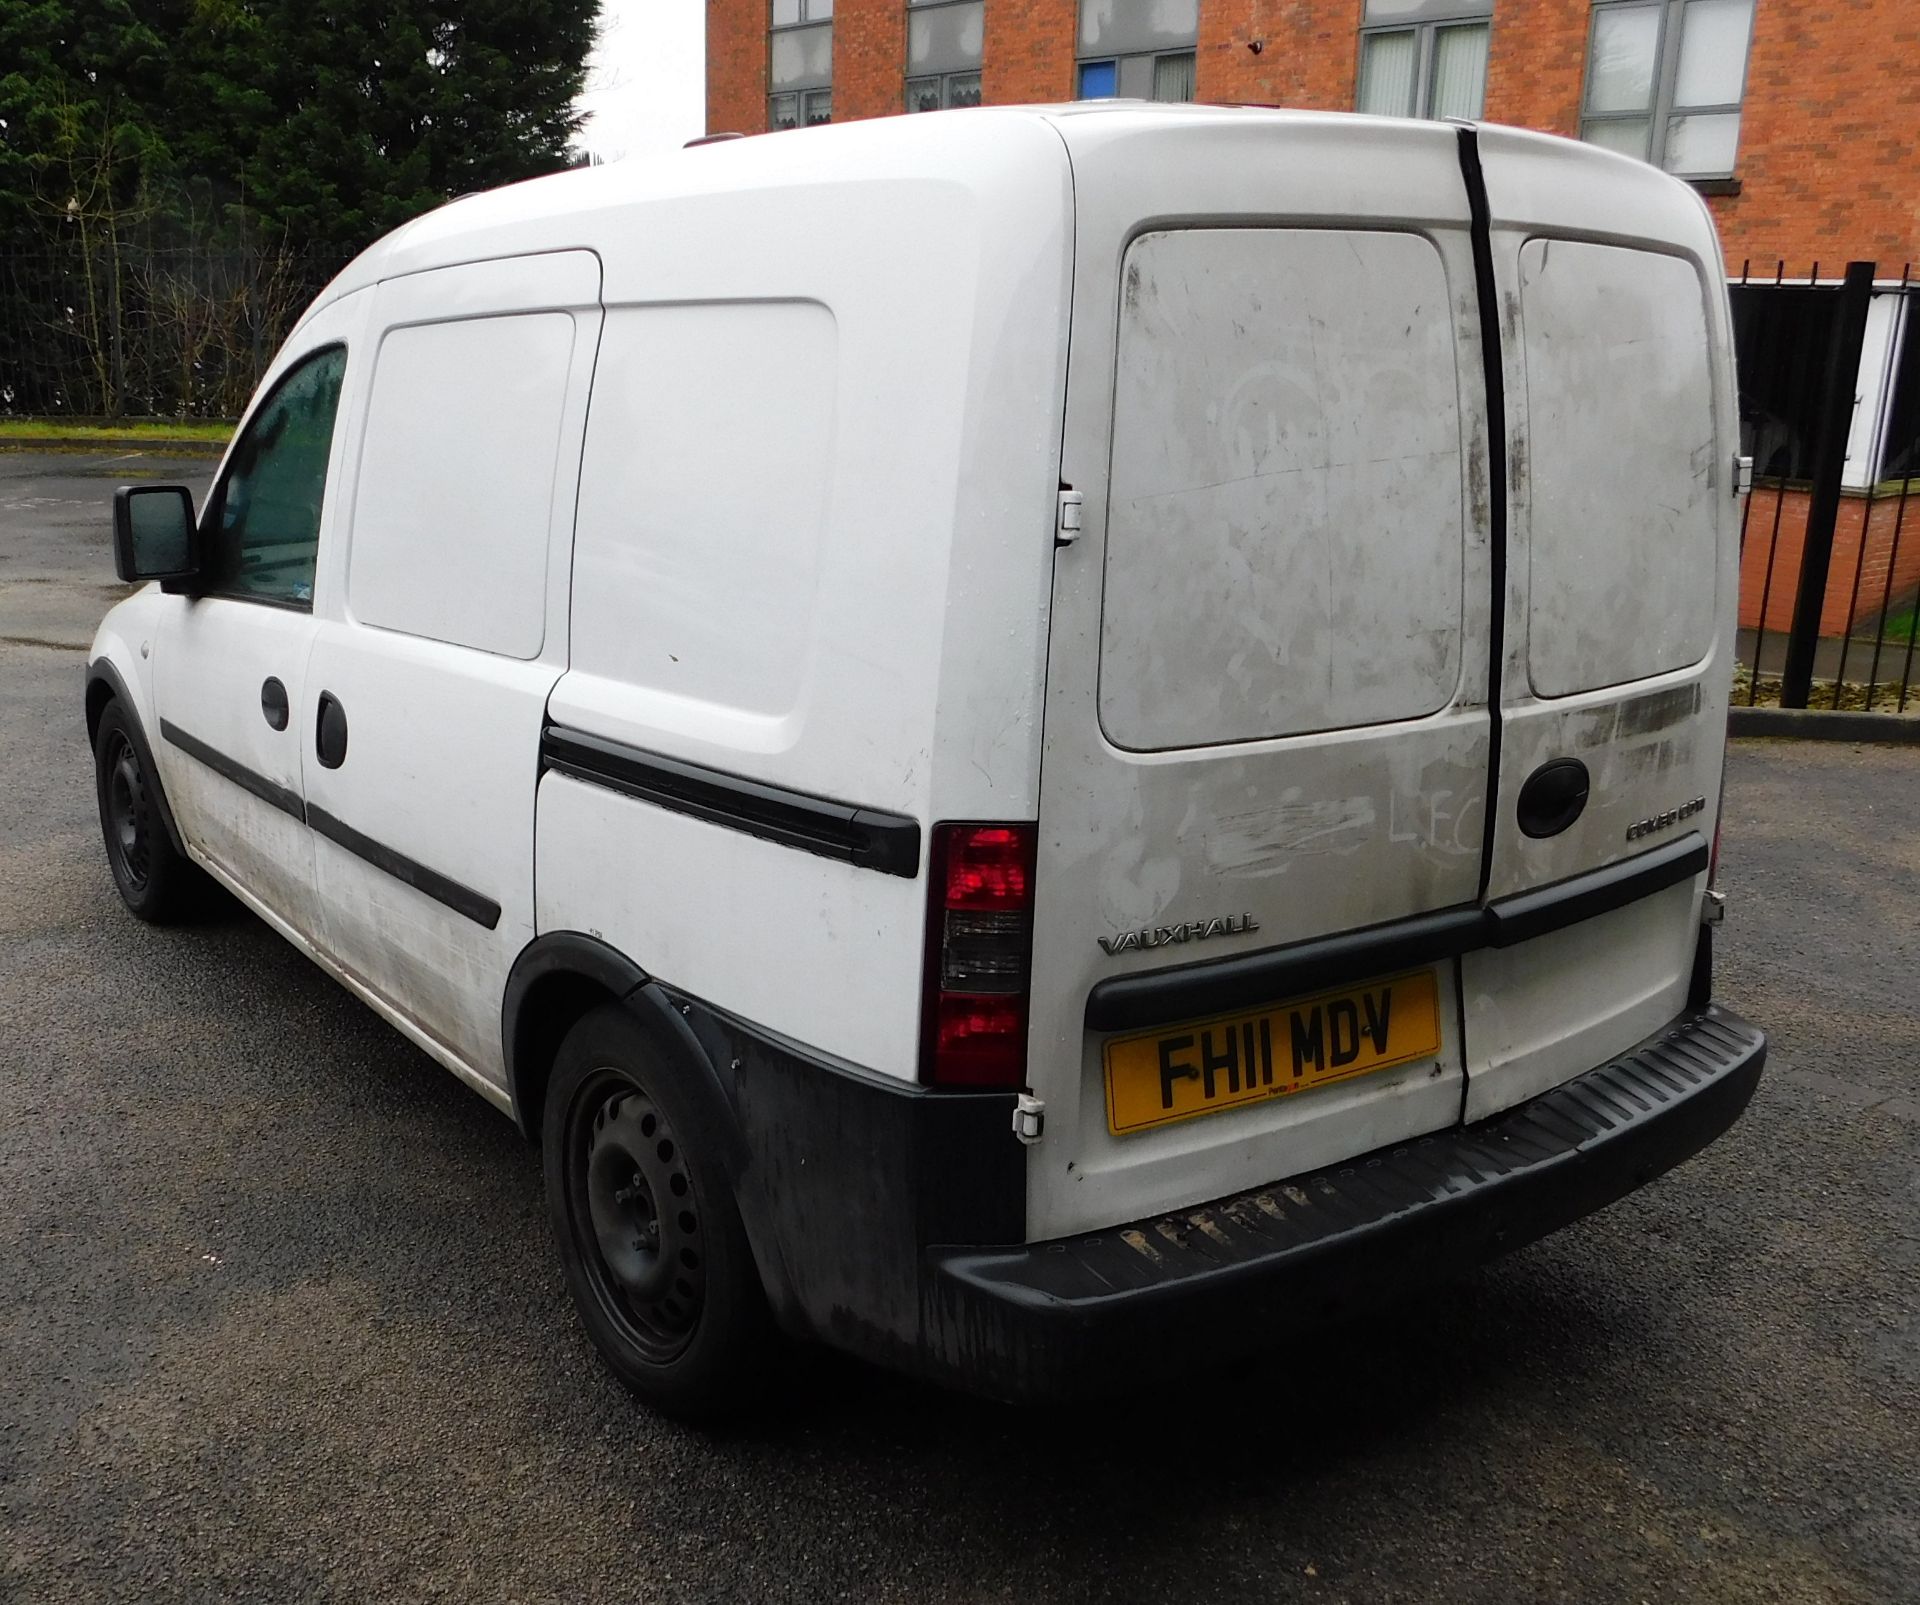 Vauxhall Combo 1.2CDTI Van, Registration FH11 MDV, - Image 6 of 10